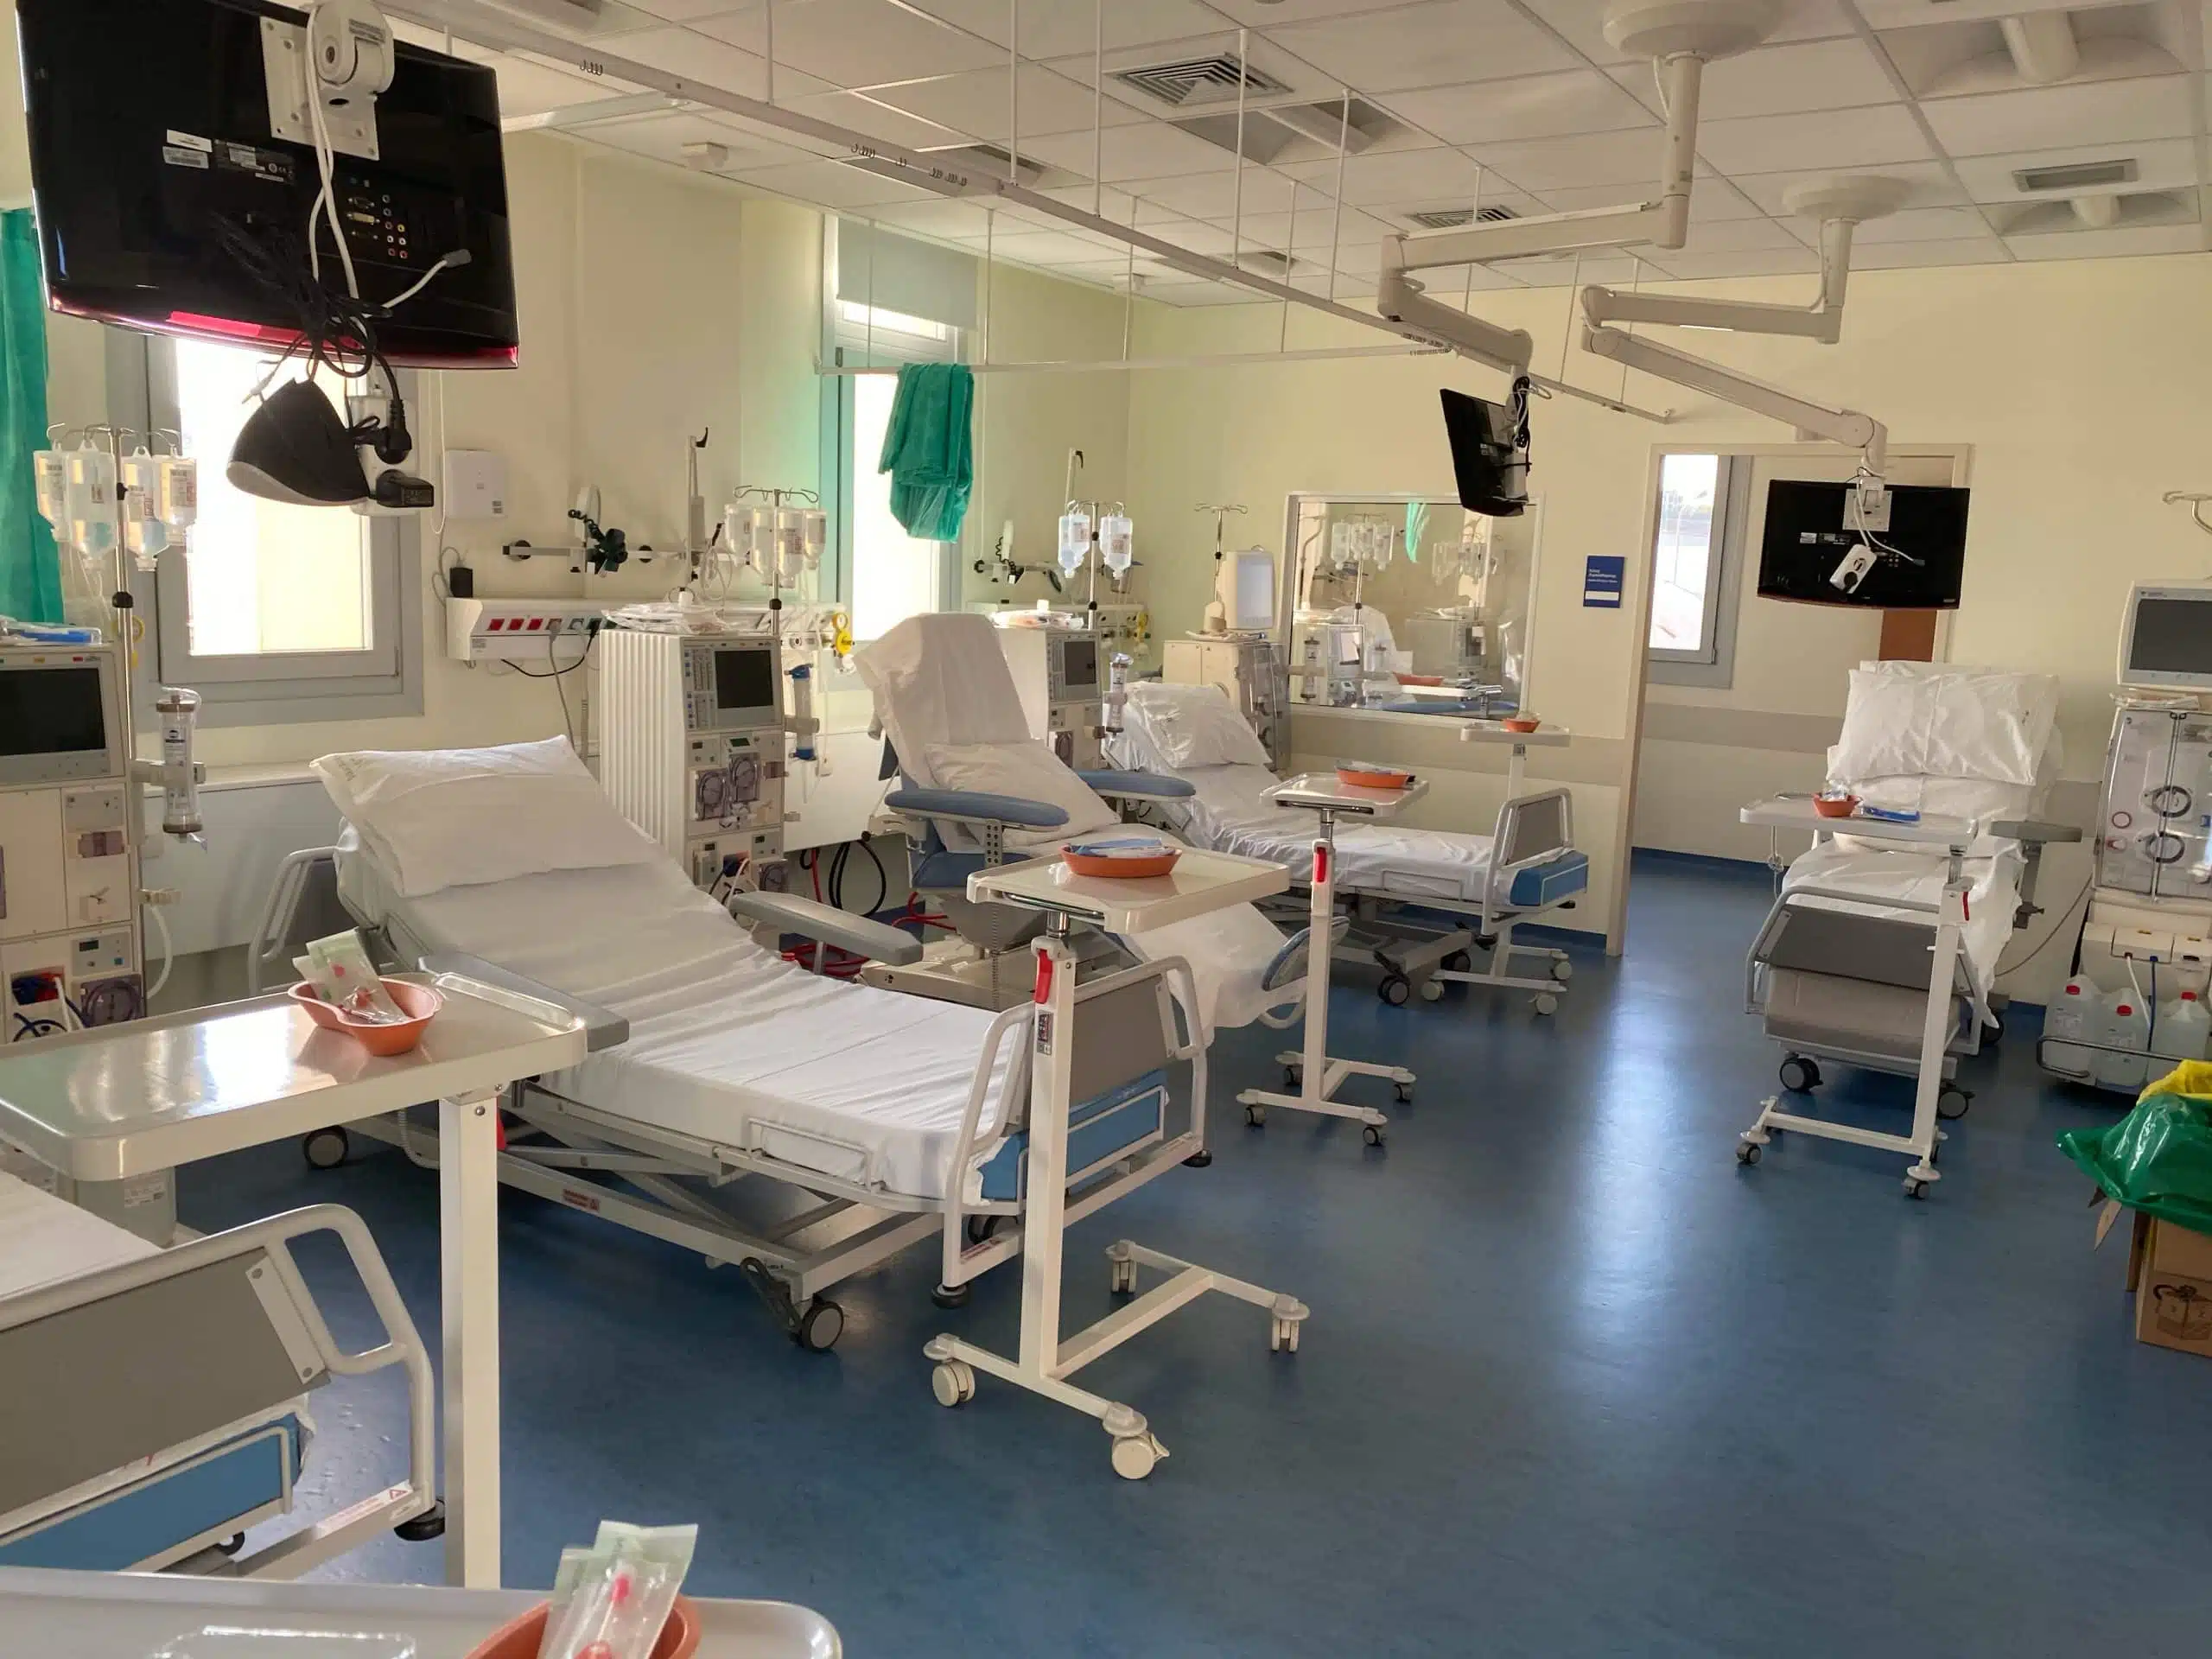 SEAJETS donates three fully equipped Dialysis Units to Santorini Hospital.